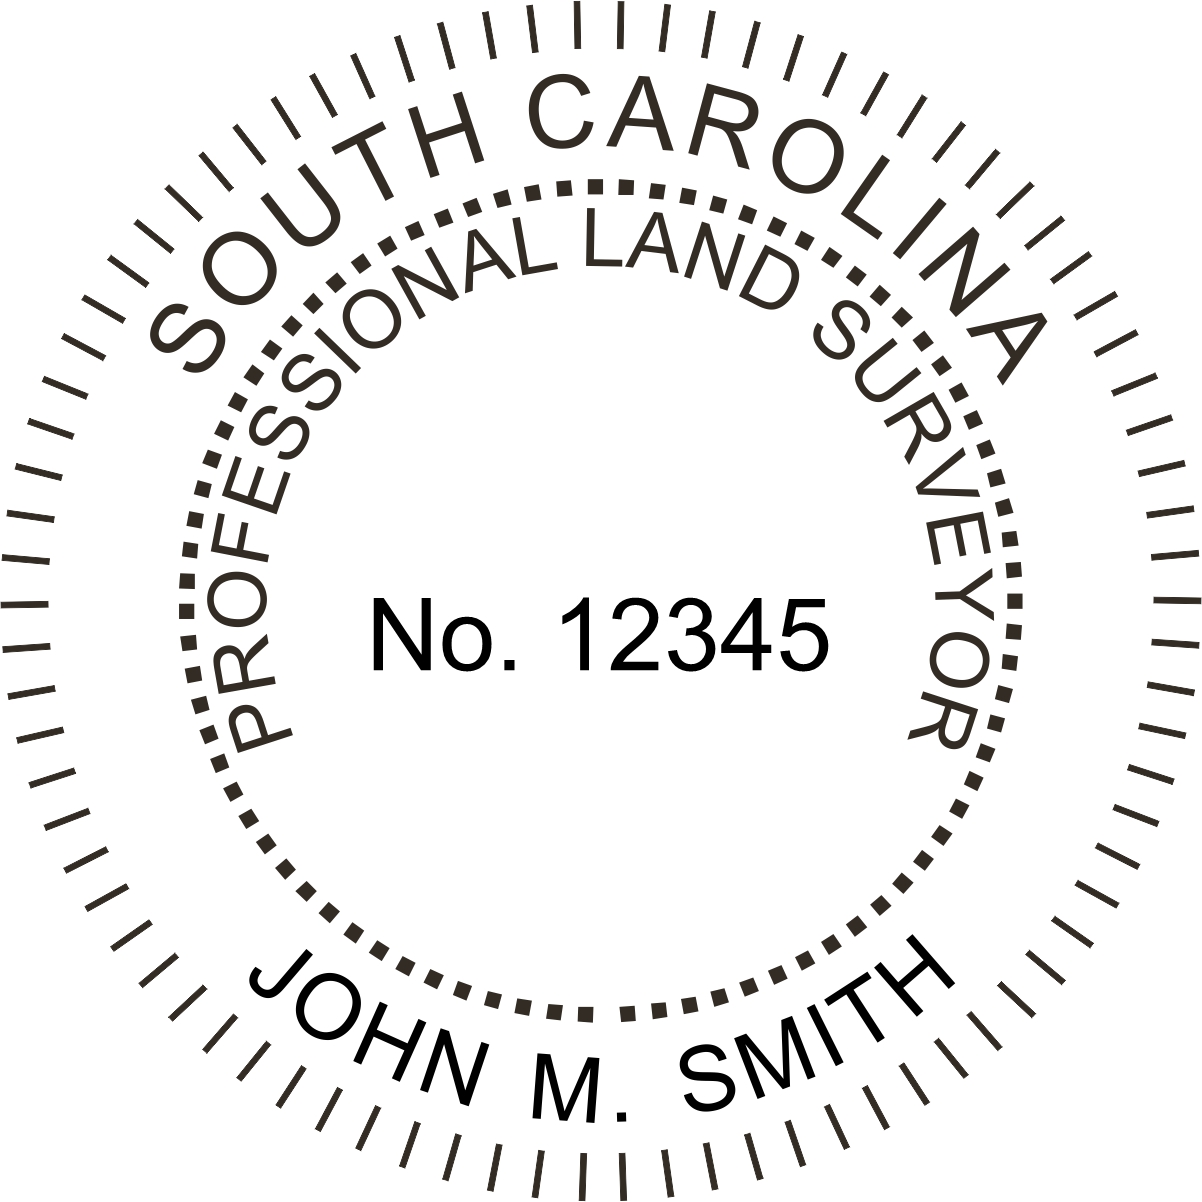 Land Surveyor Seal - Desk - South Carolina